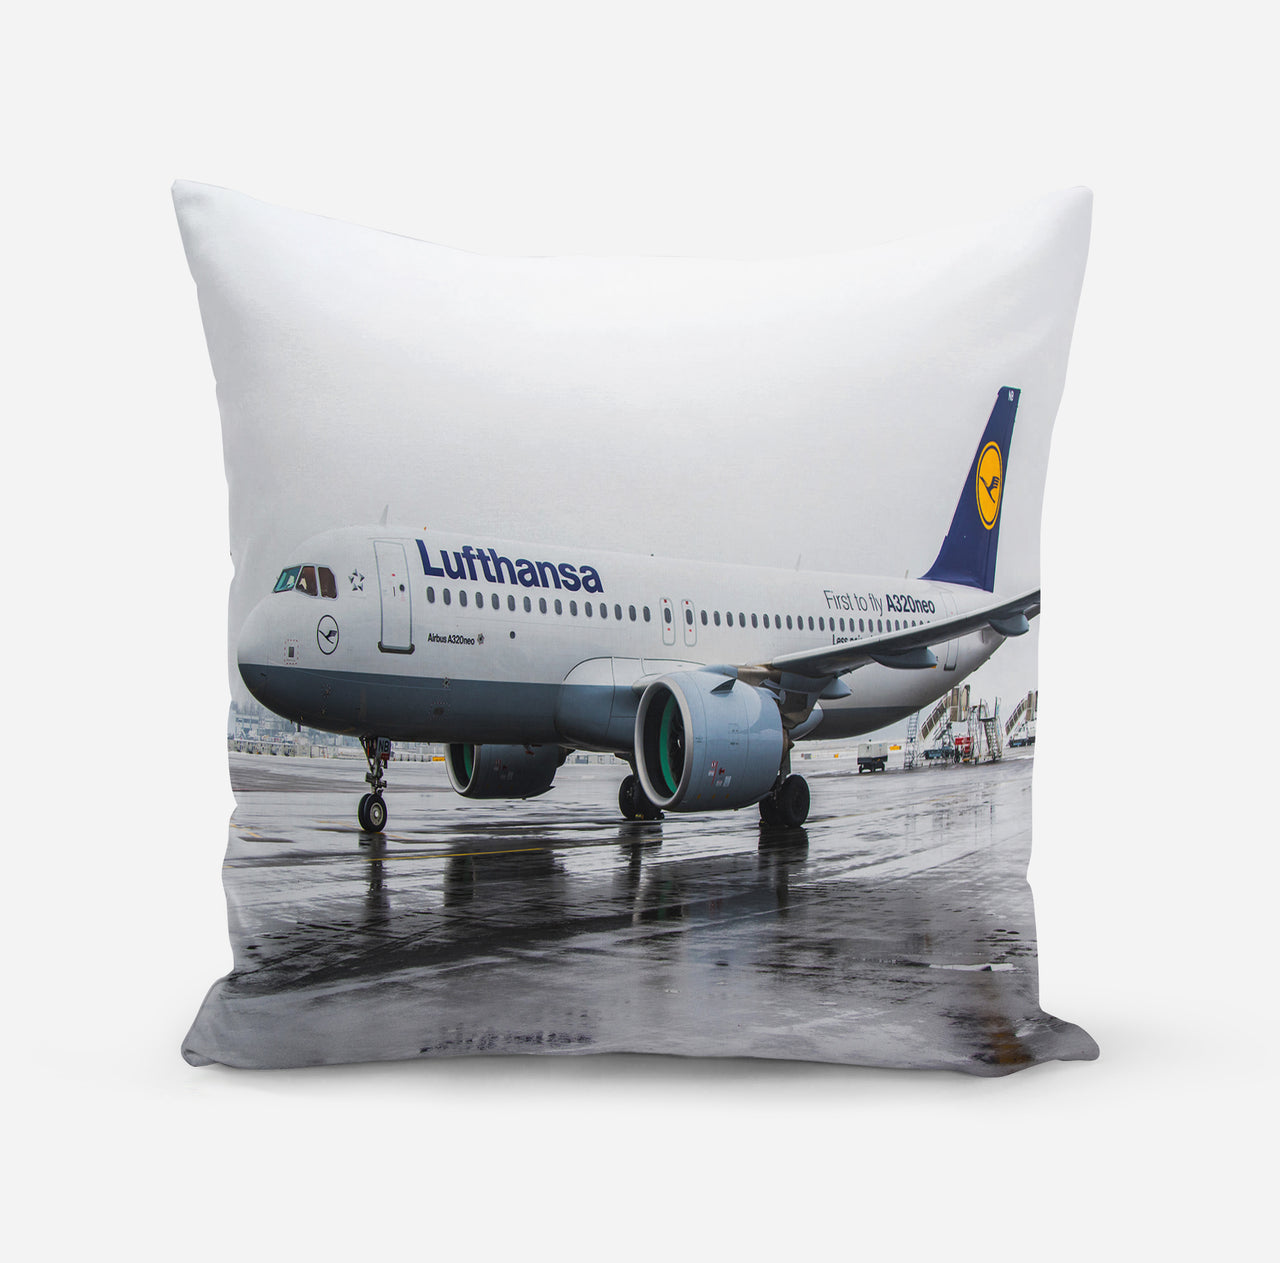 Lufthansa's A320 Neo Designed Pillows